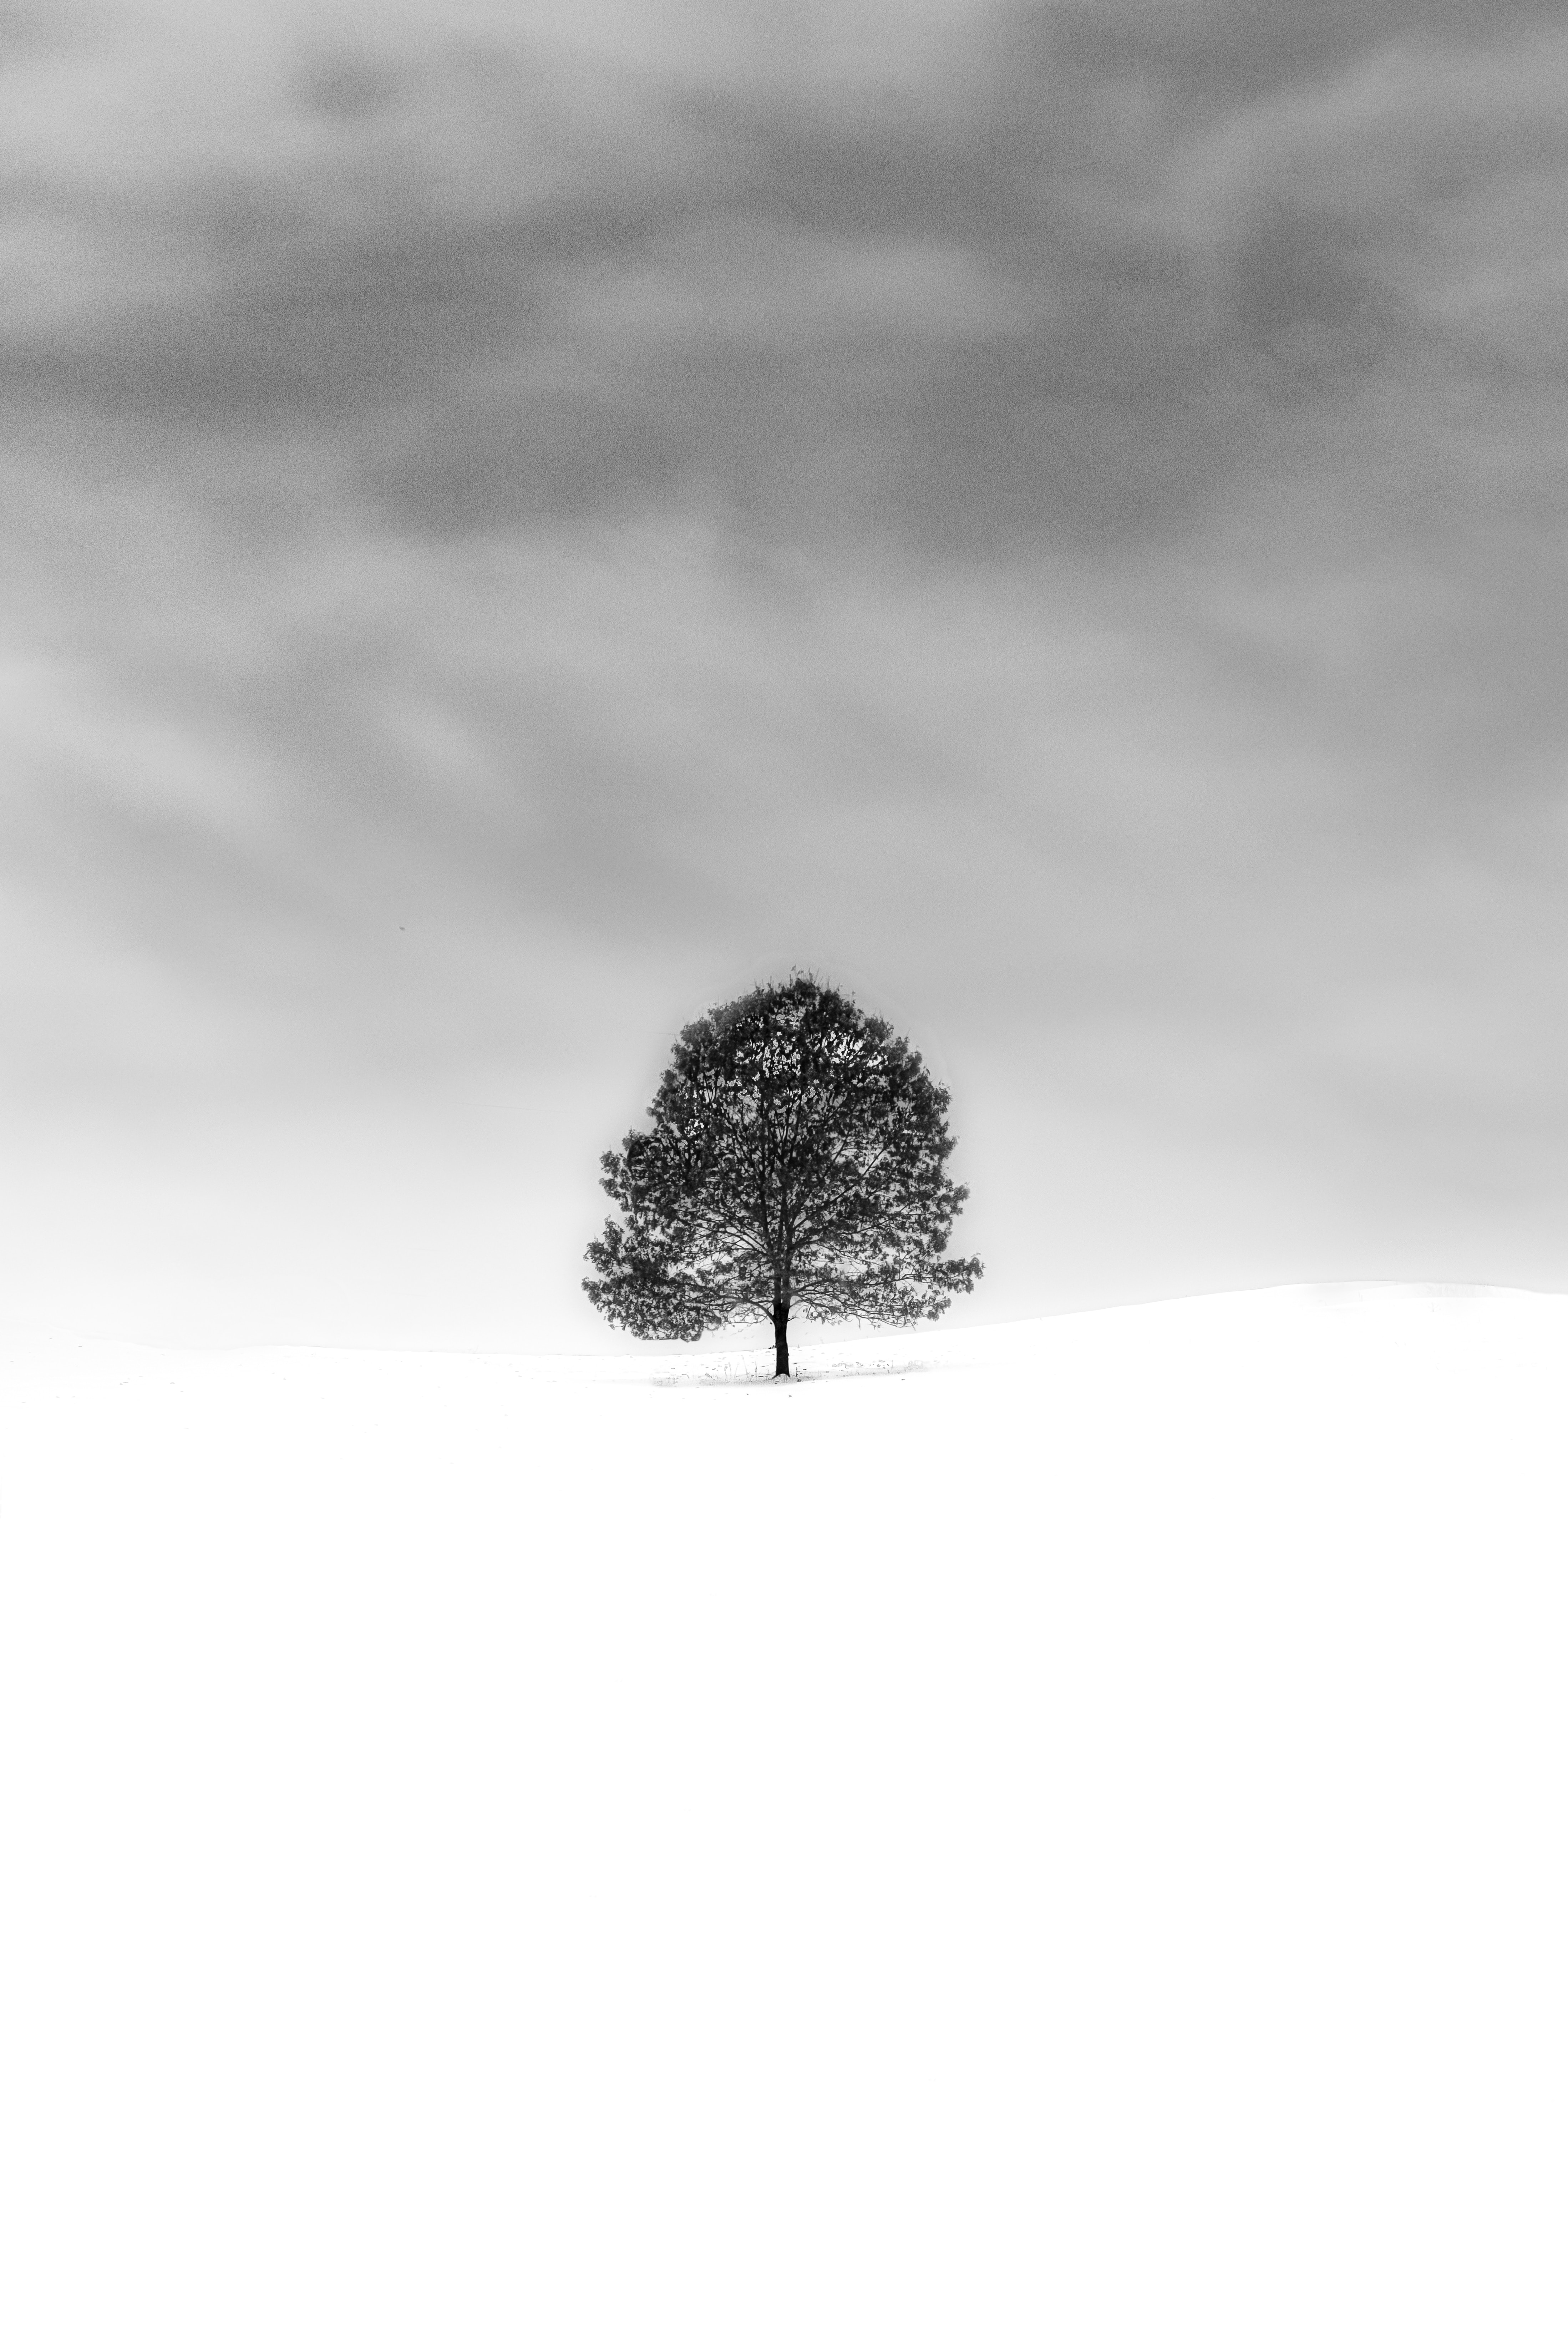 97569 descargar imagen minimalismo, madera, naturaleza, nieve, árbol, bw, chb: fondos de pantalla y protectores de pantalla gratis